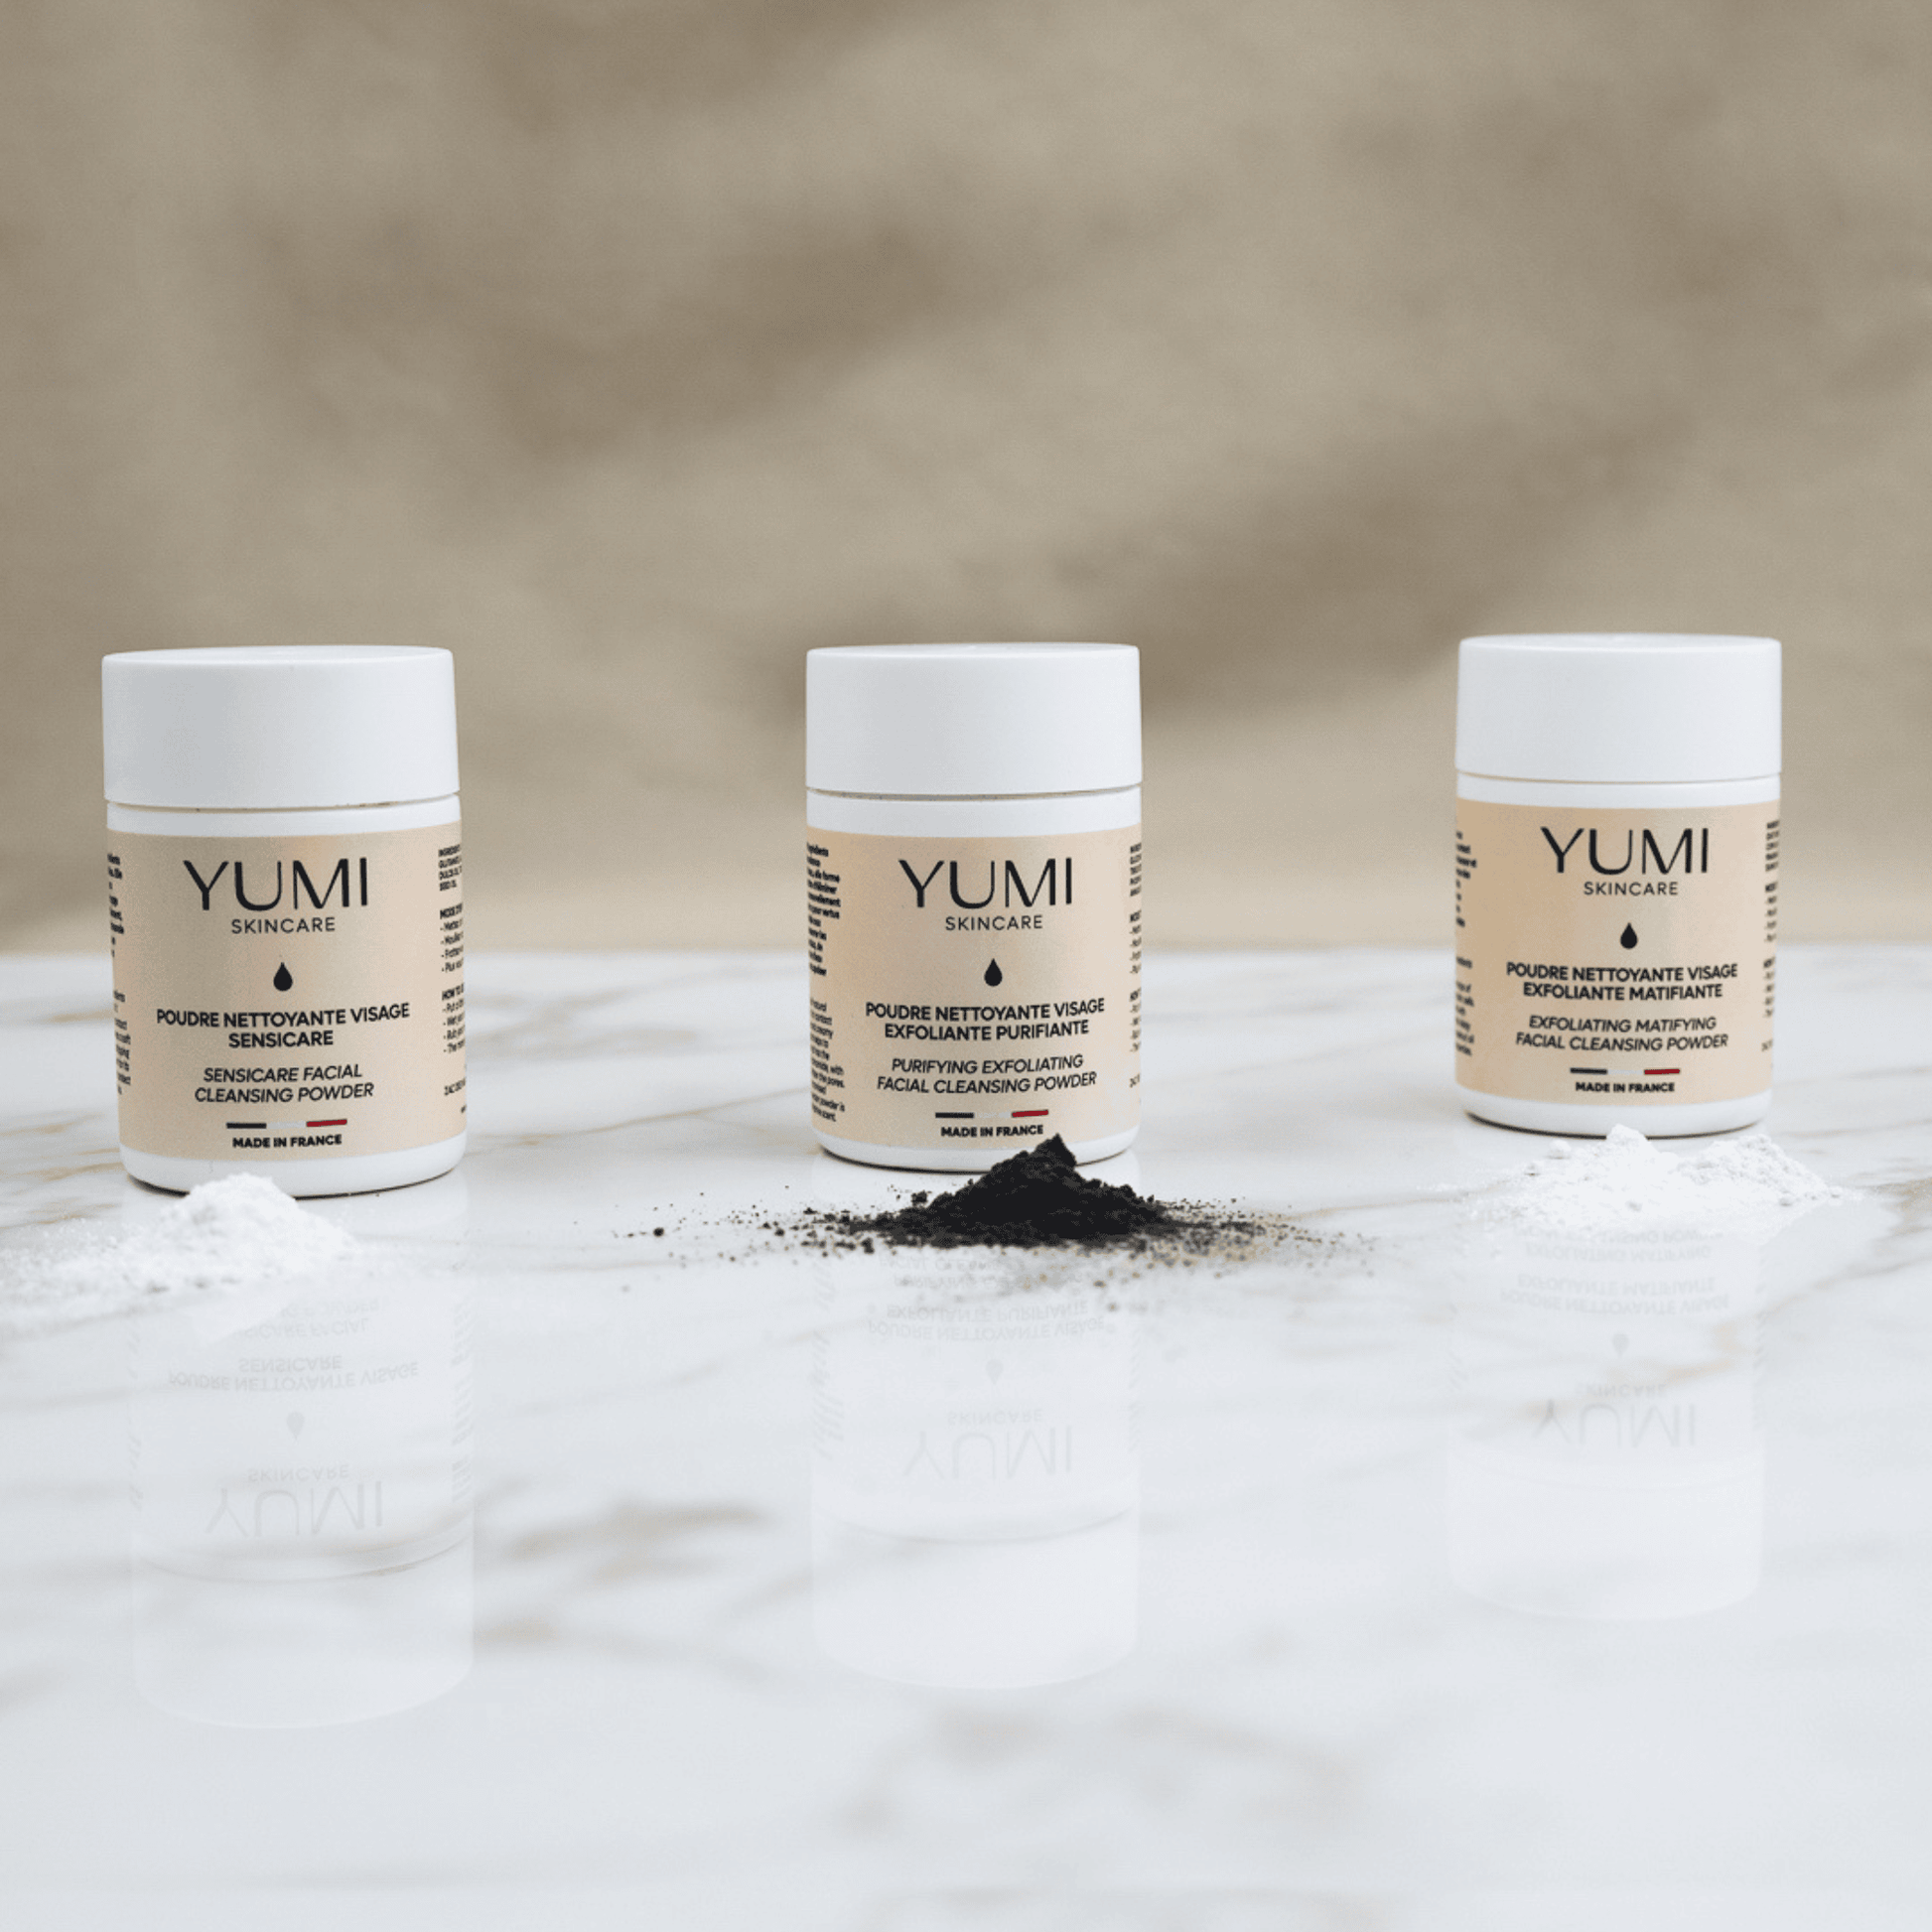 Yumi Skincare Facial Cleansing Powder